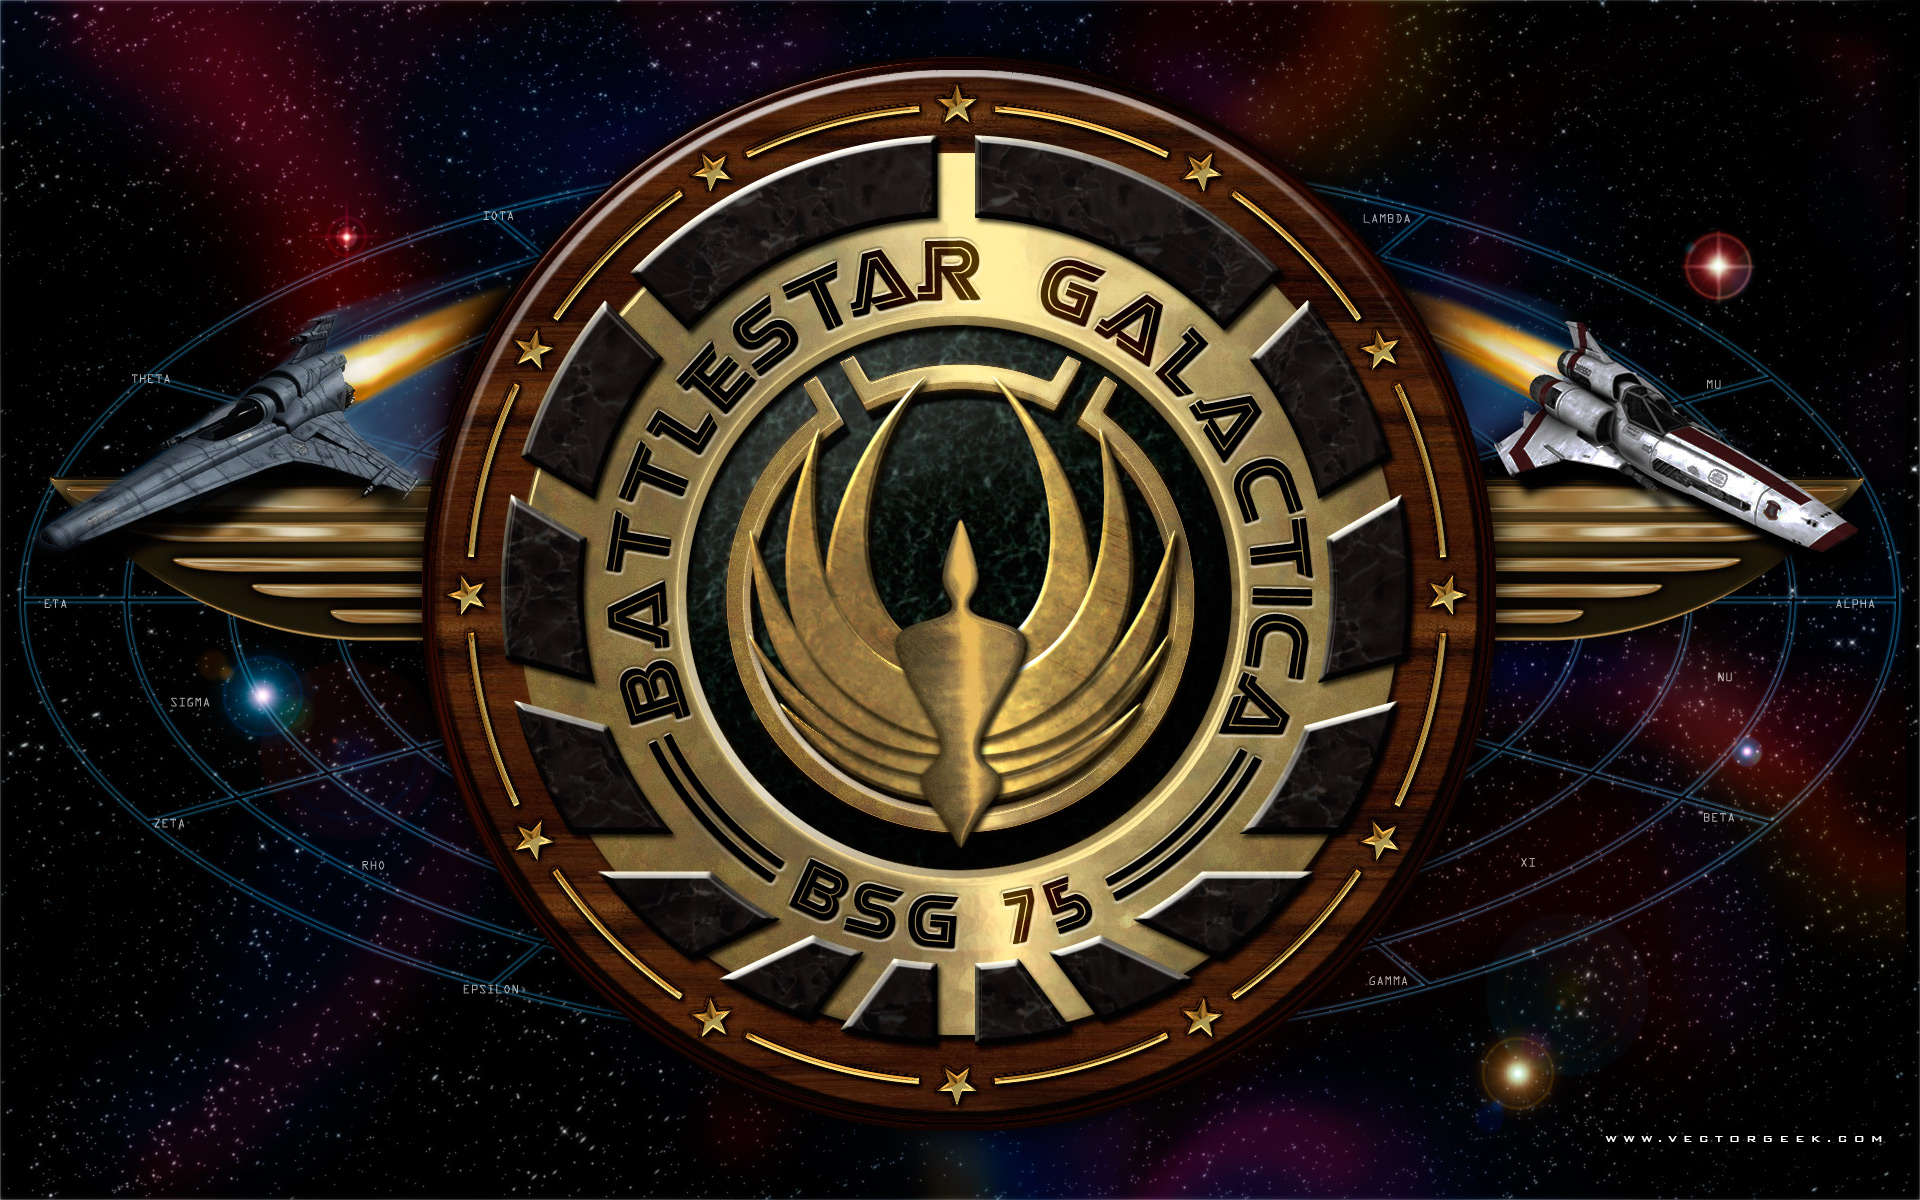 50 Battlestar Galactica Wallpapers And Screensavers On Wallpapersafari